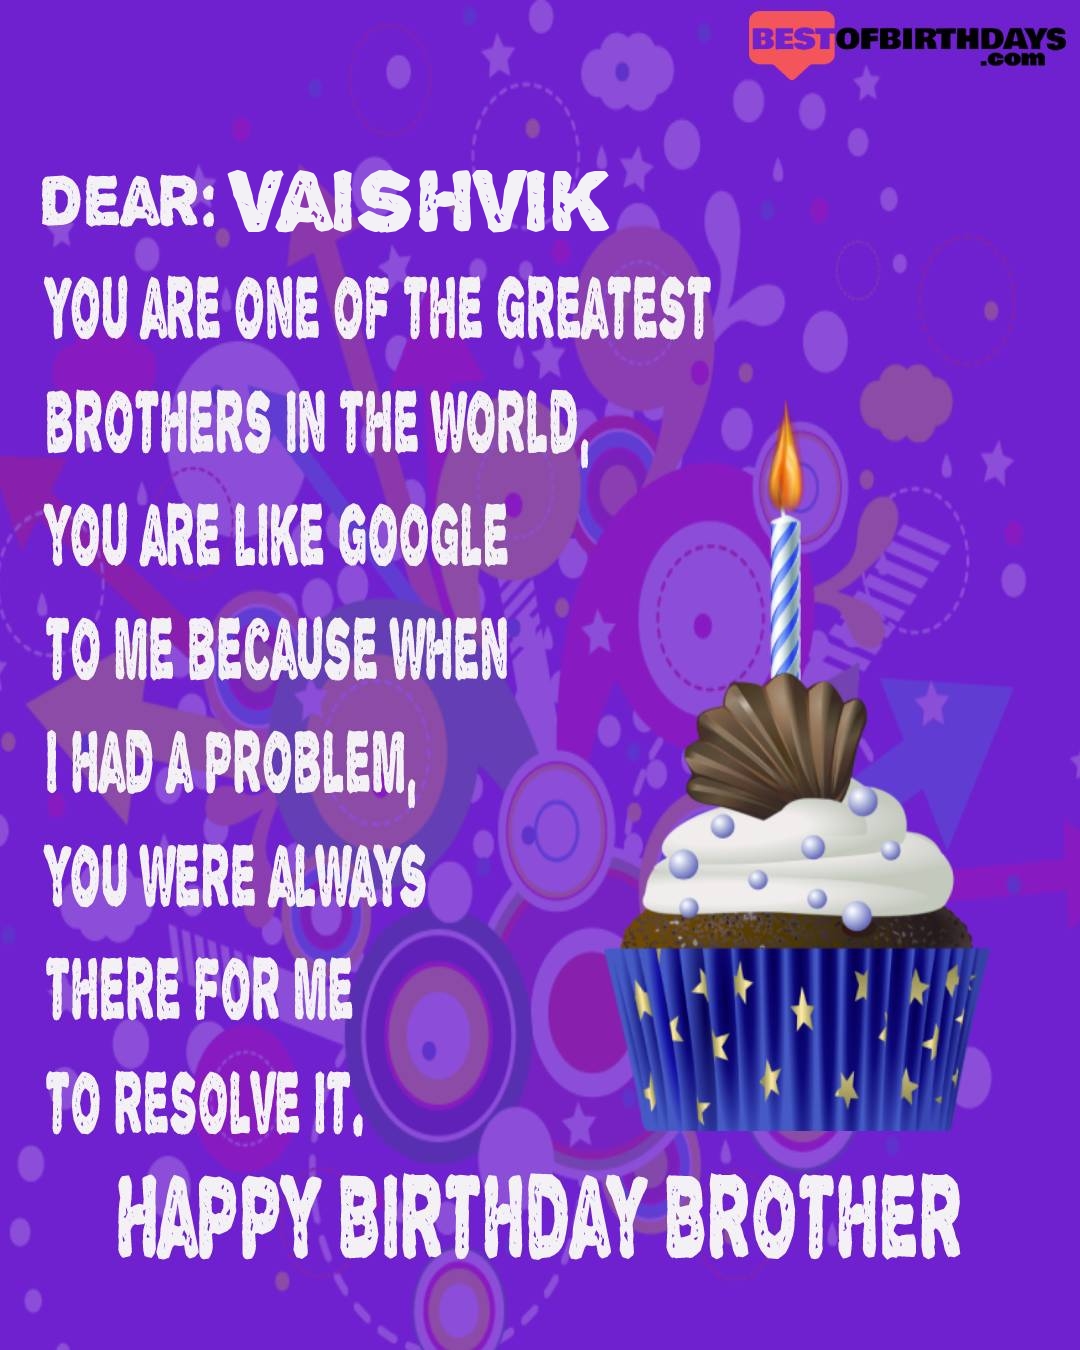 Happy birthday vaishvik bhai brother bro